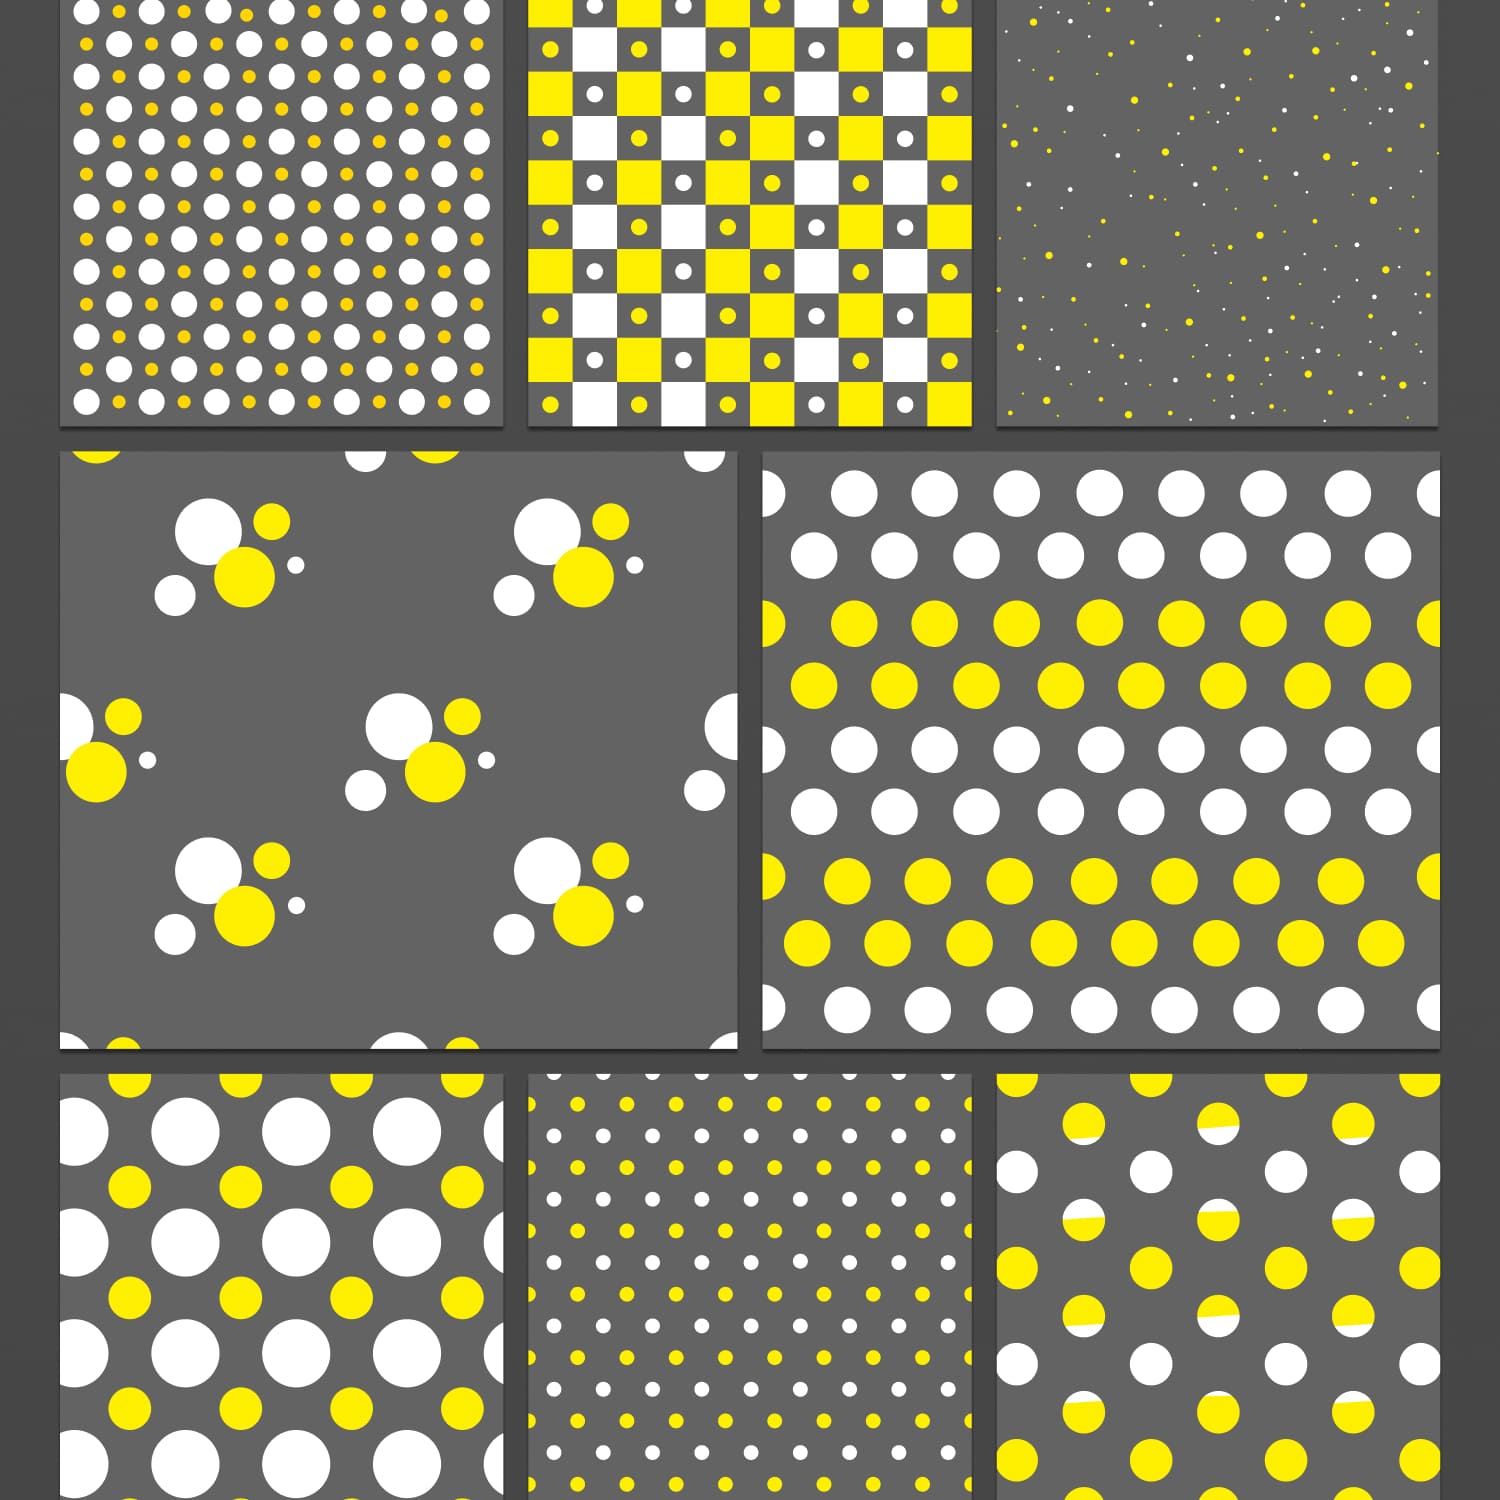 yellow white polka dot patterns cover.